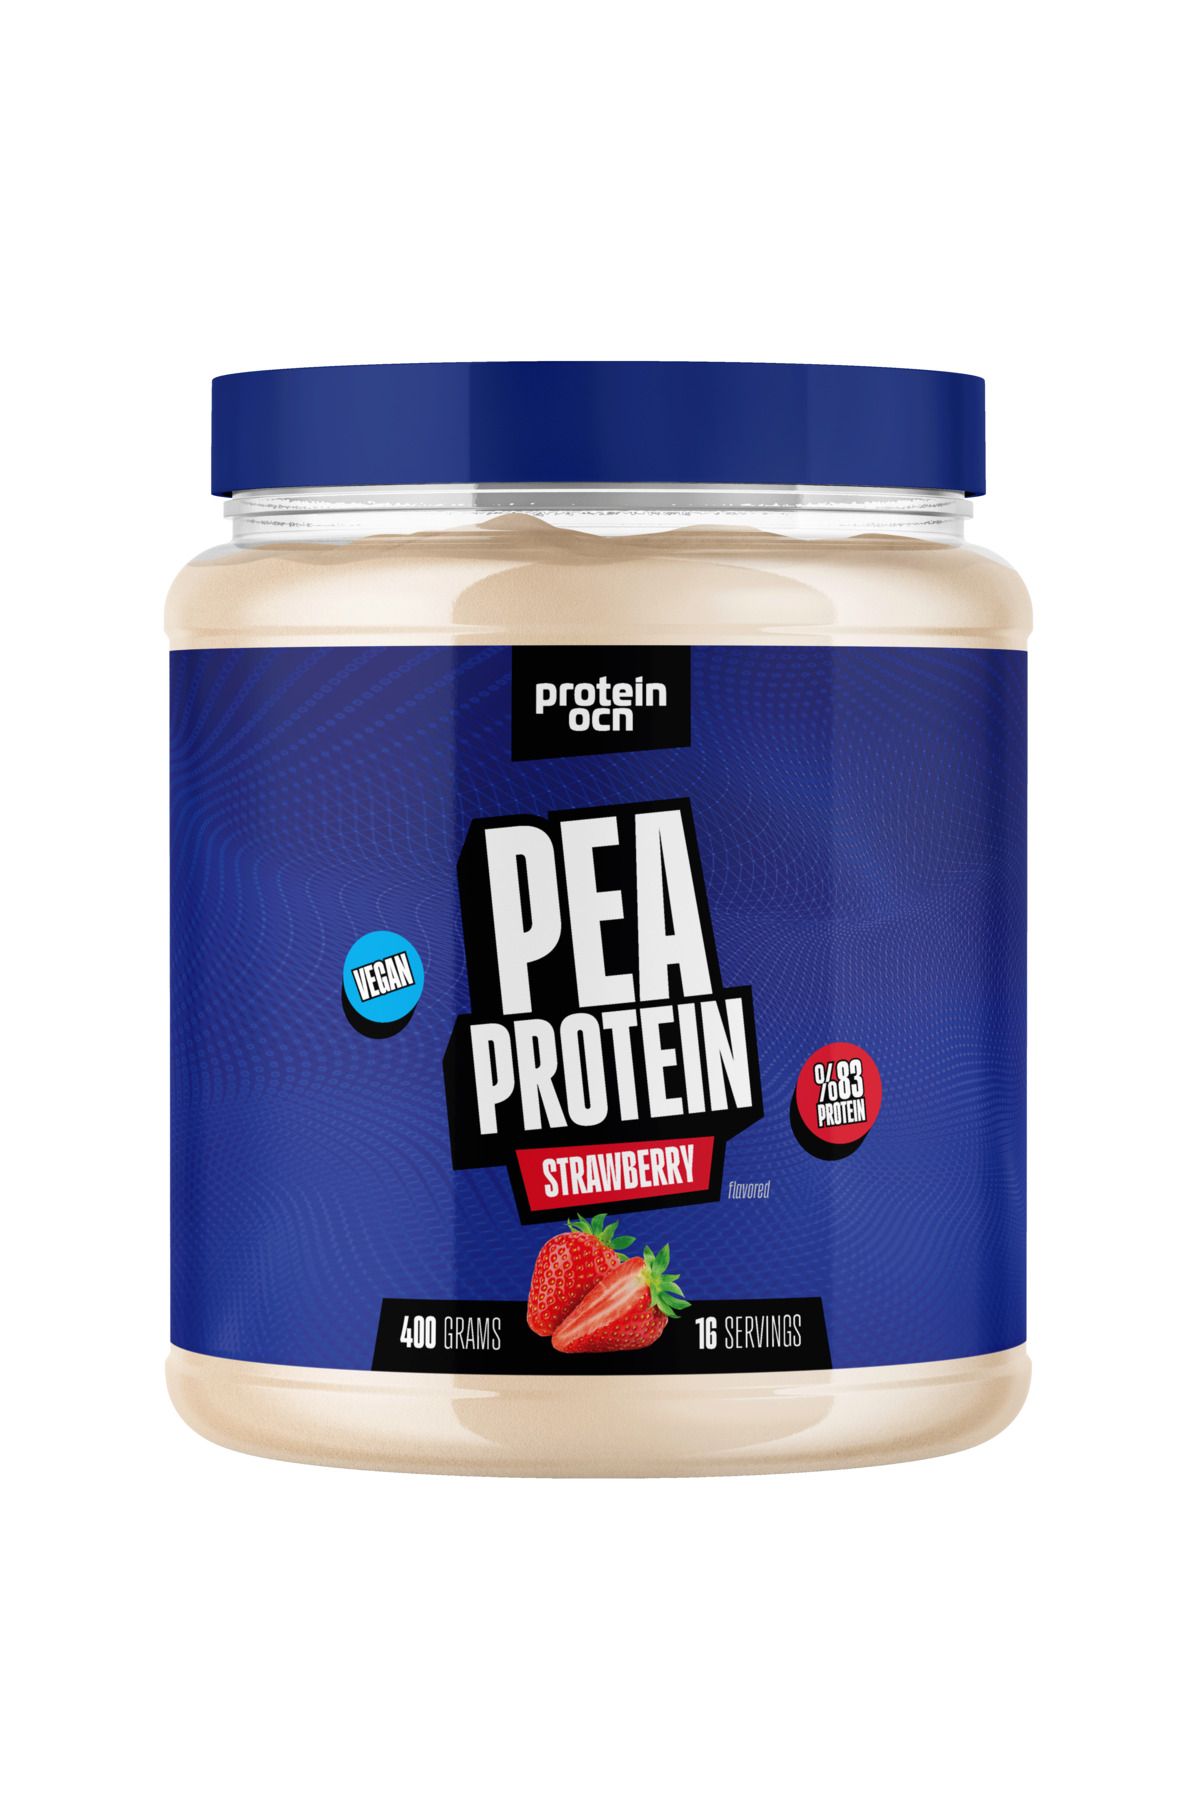 Proteinocean Pea Proteın Çilek - 400g - 16 Servis